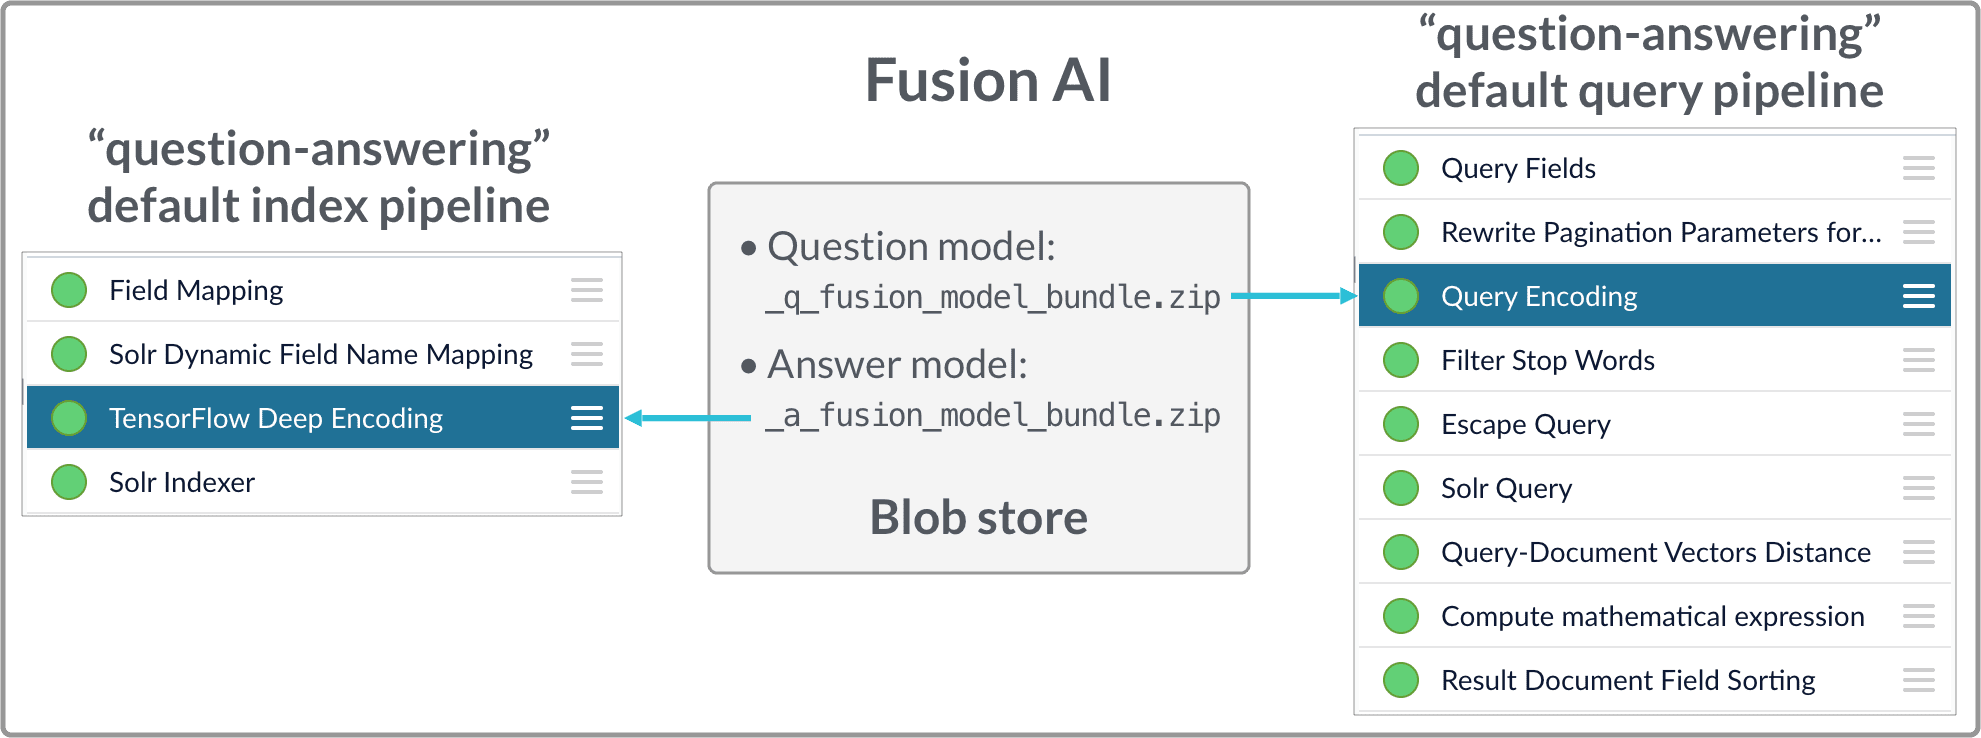 FAQ model deployment